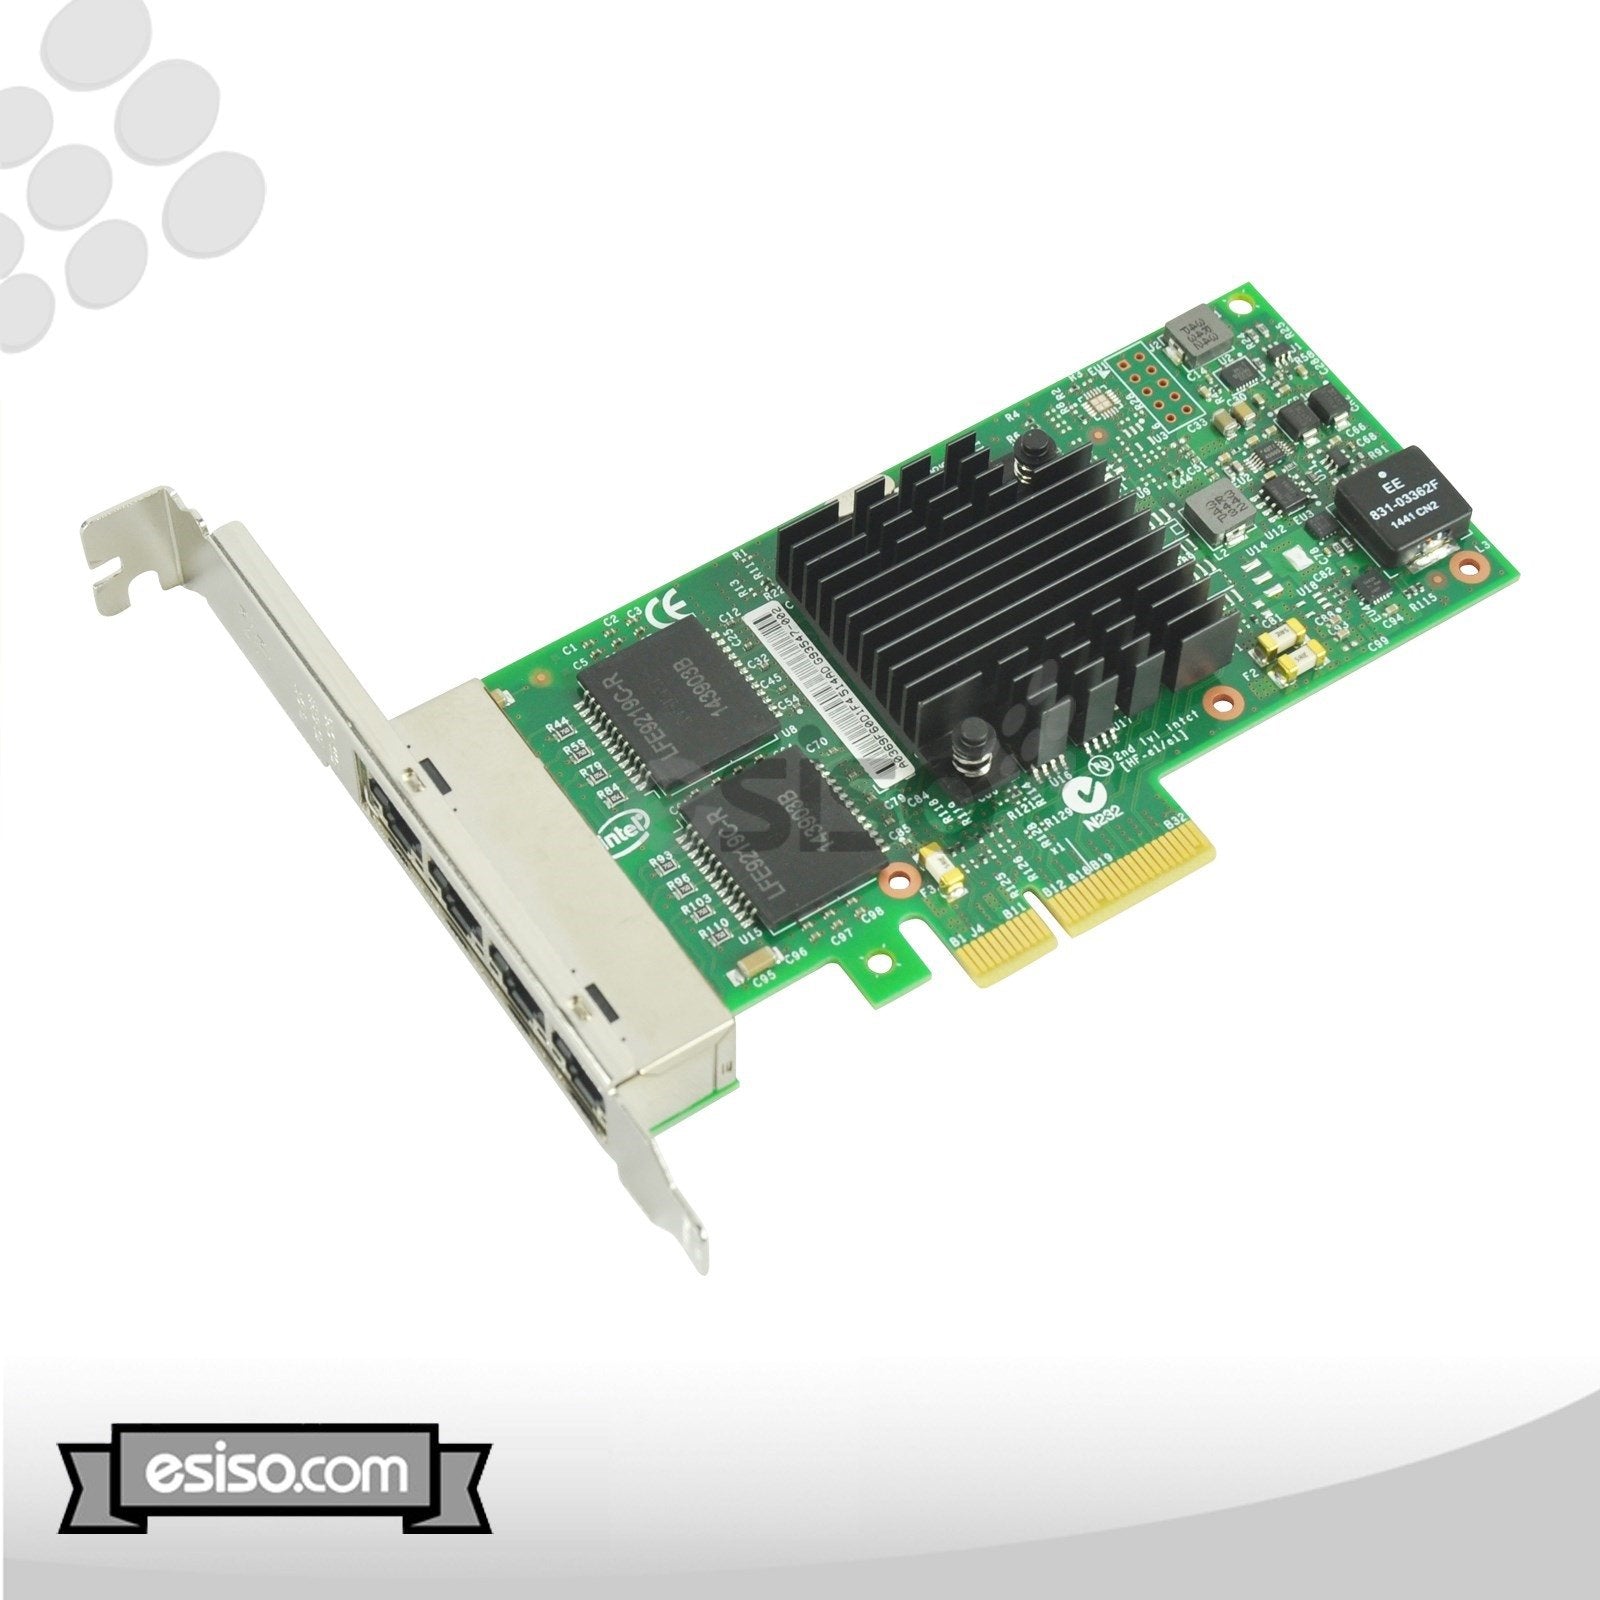 03T8760 LENOVO I350-T4 QUAD PORT 1GB PCIE ETHERNET ADAPTER CARD